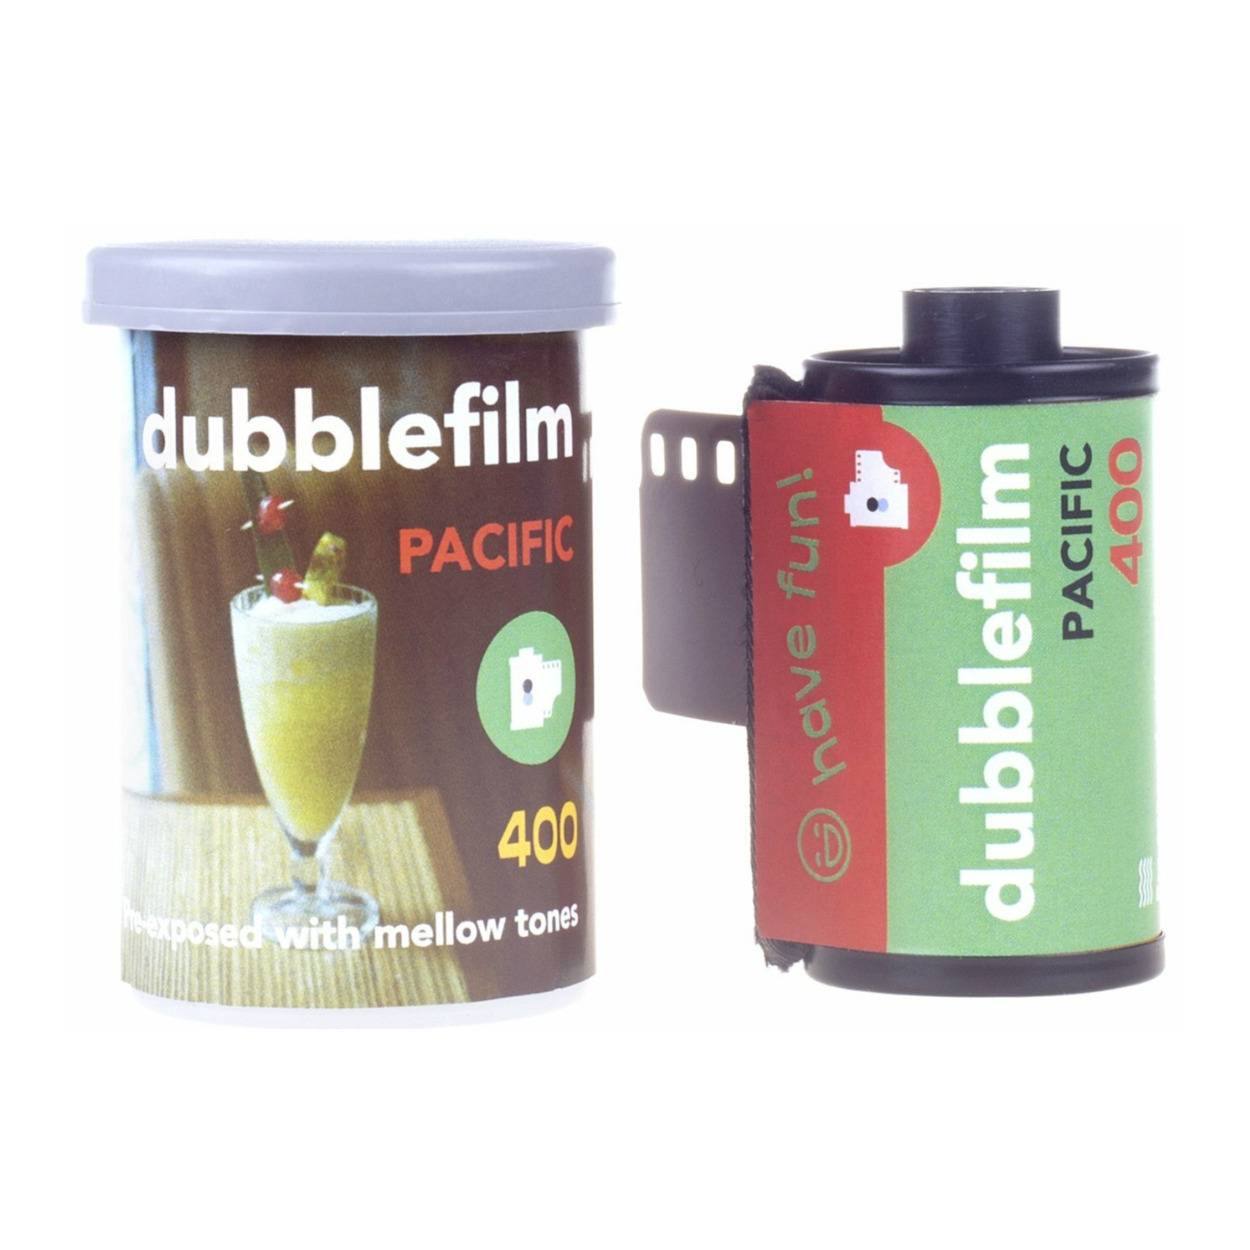 dubblefilm Pacific ISO 400 Color 35mm Film (36 Exposures)